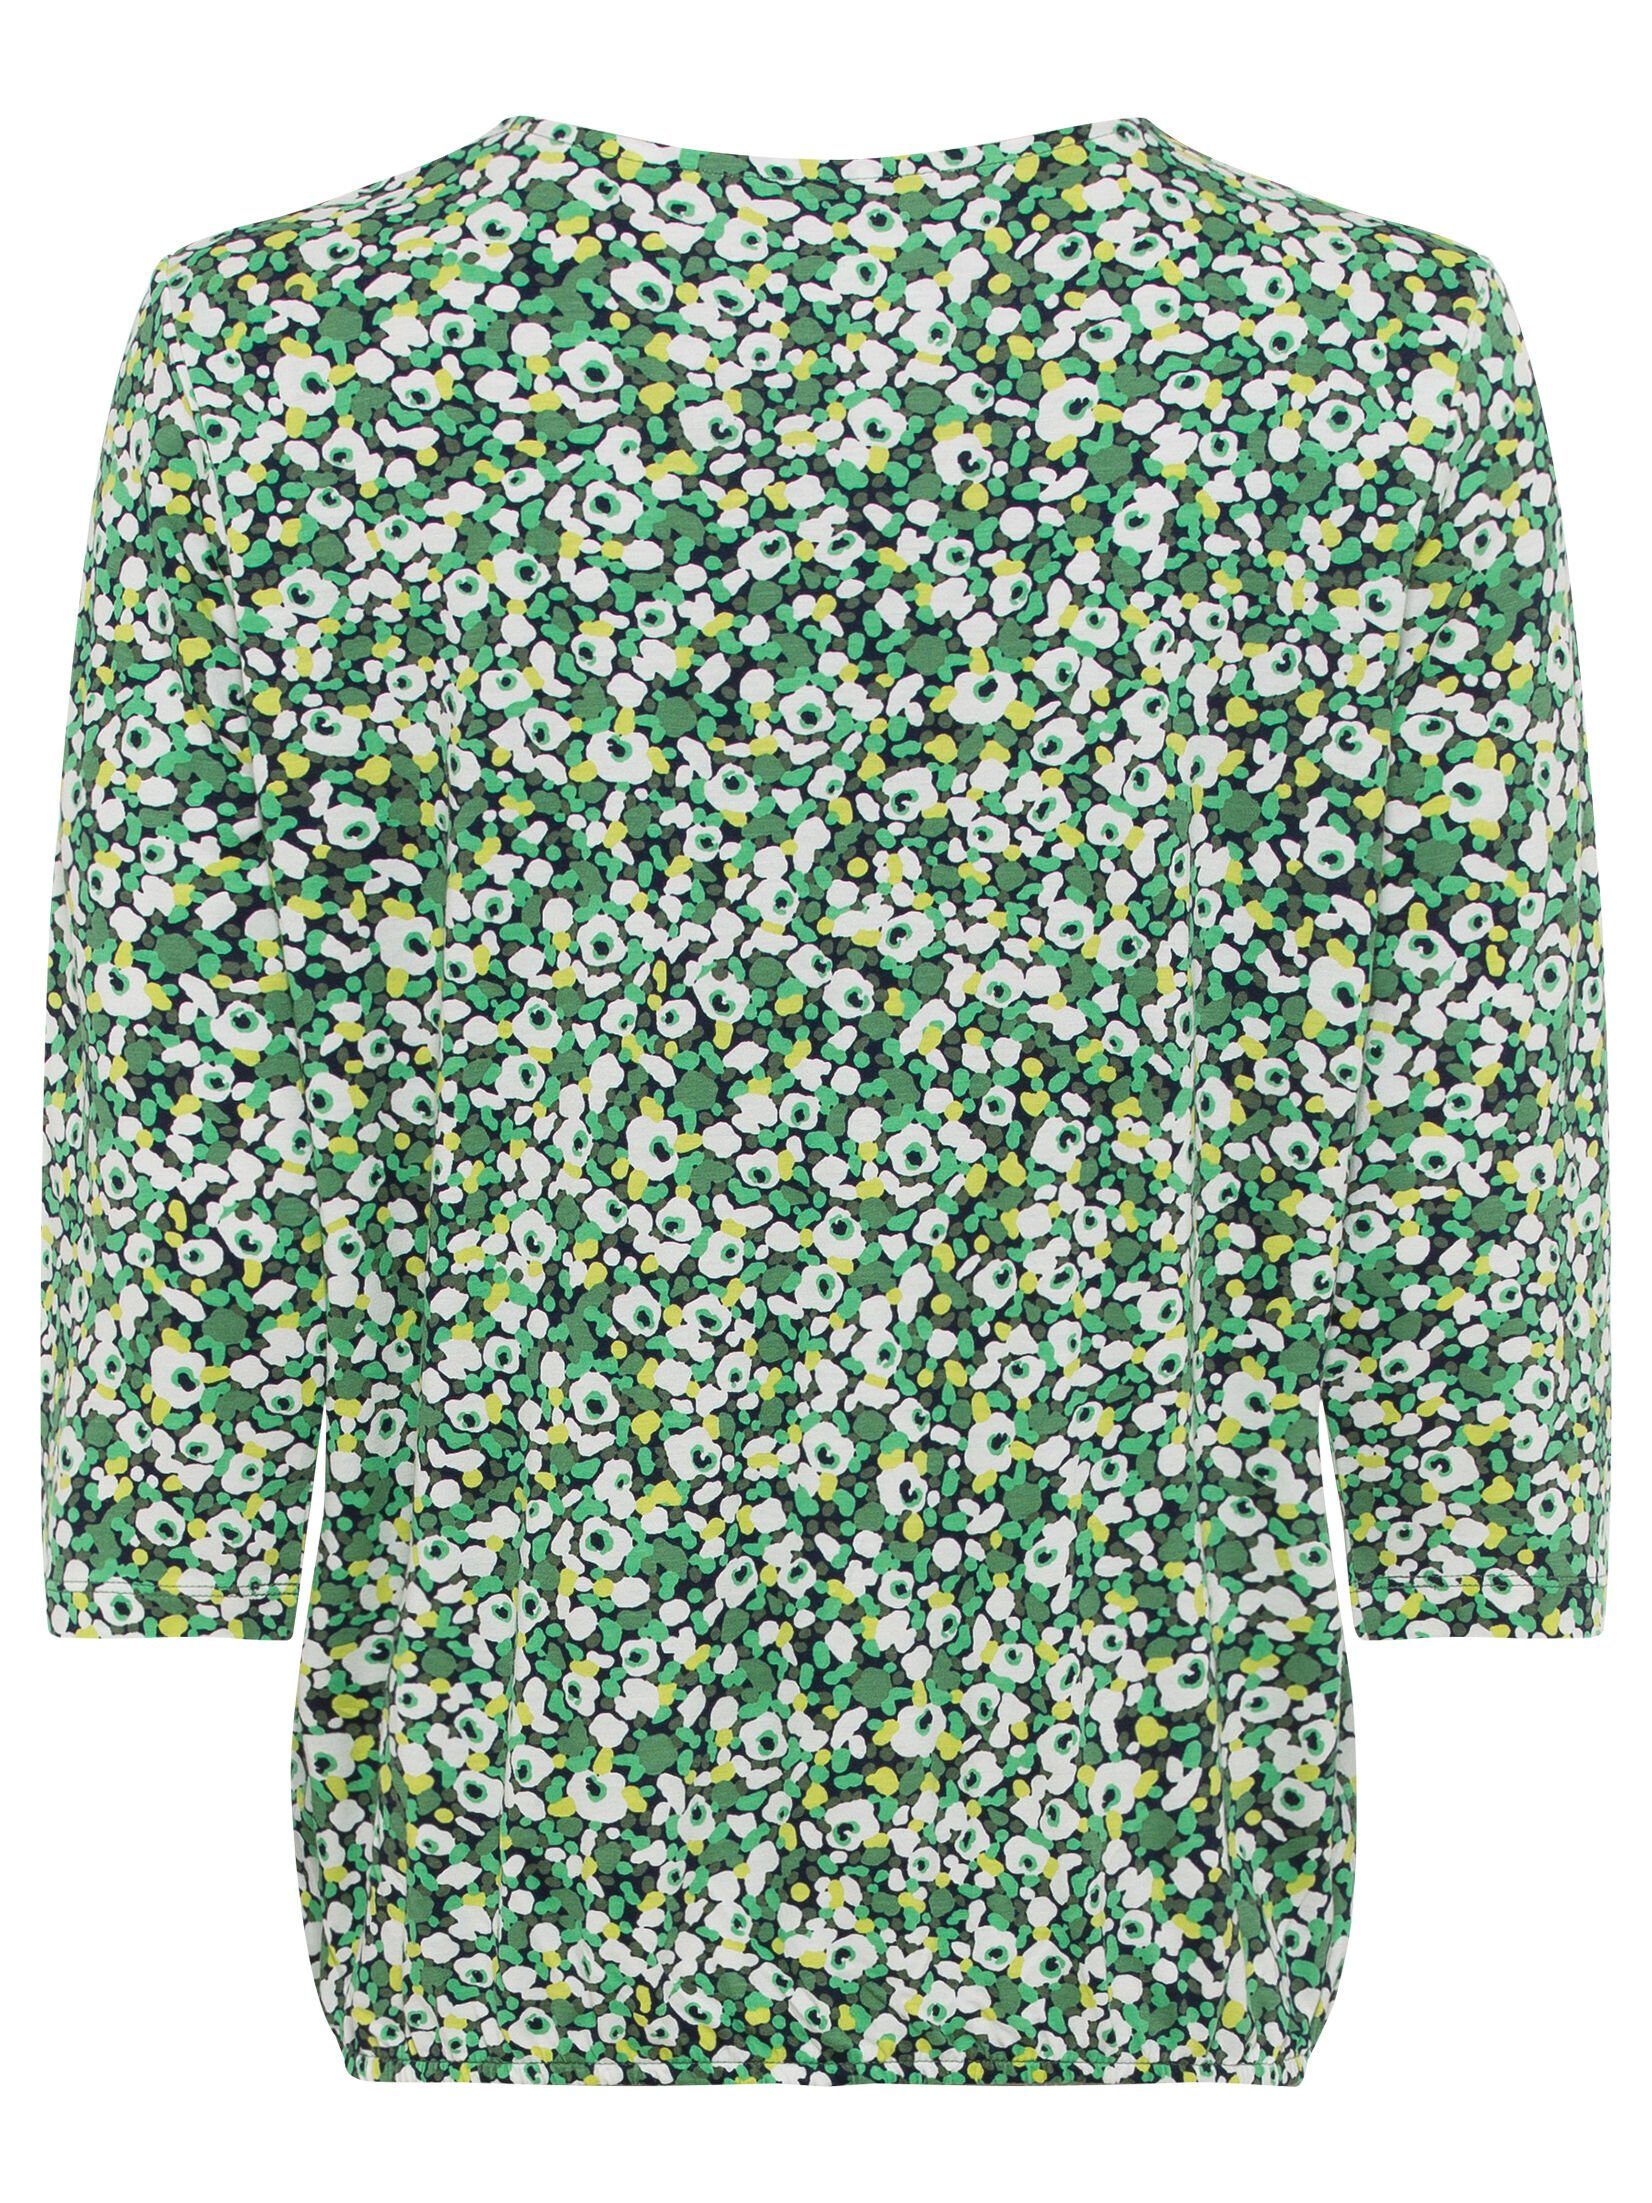 Print-Shirt mit Blumenprint Olsen